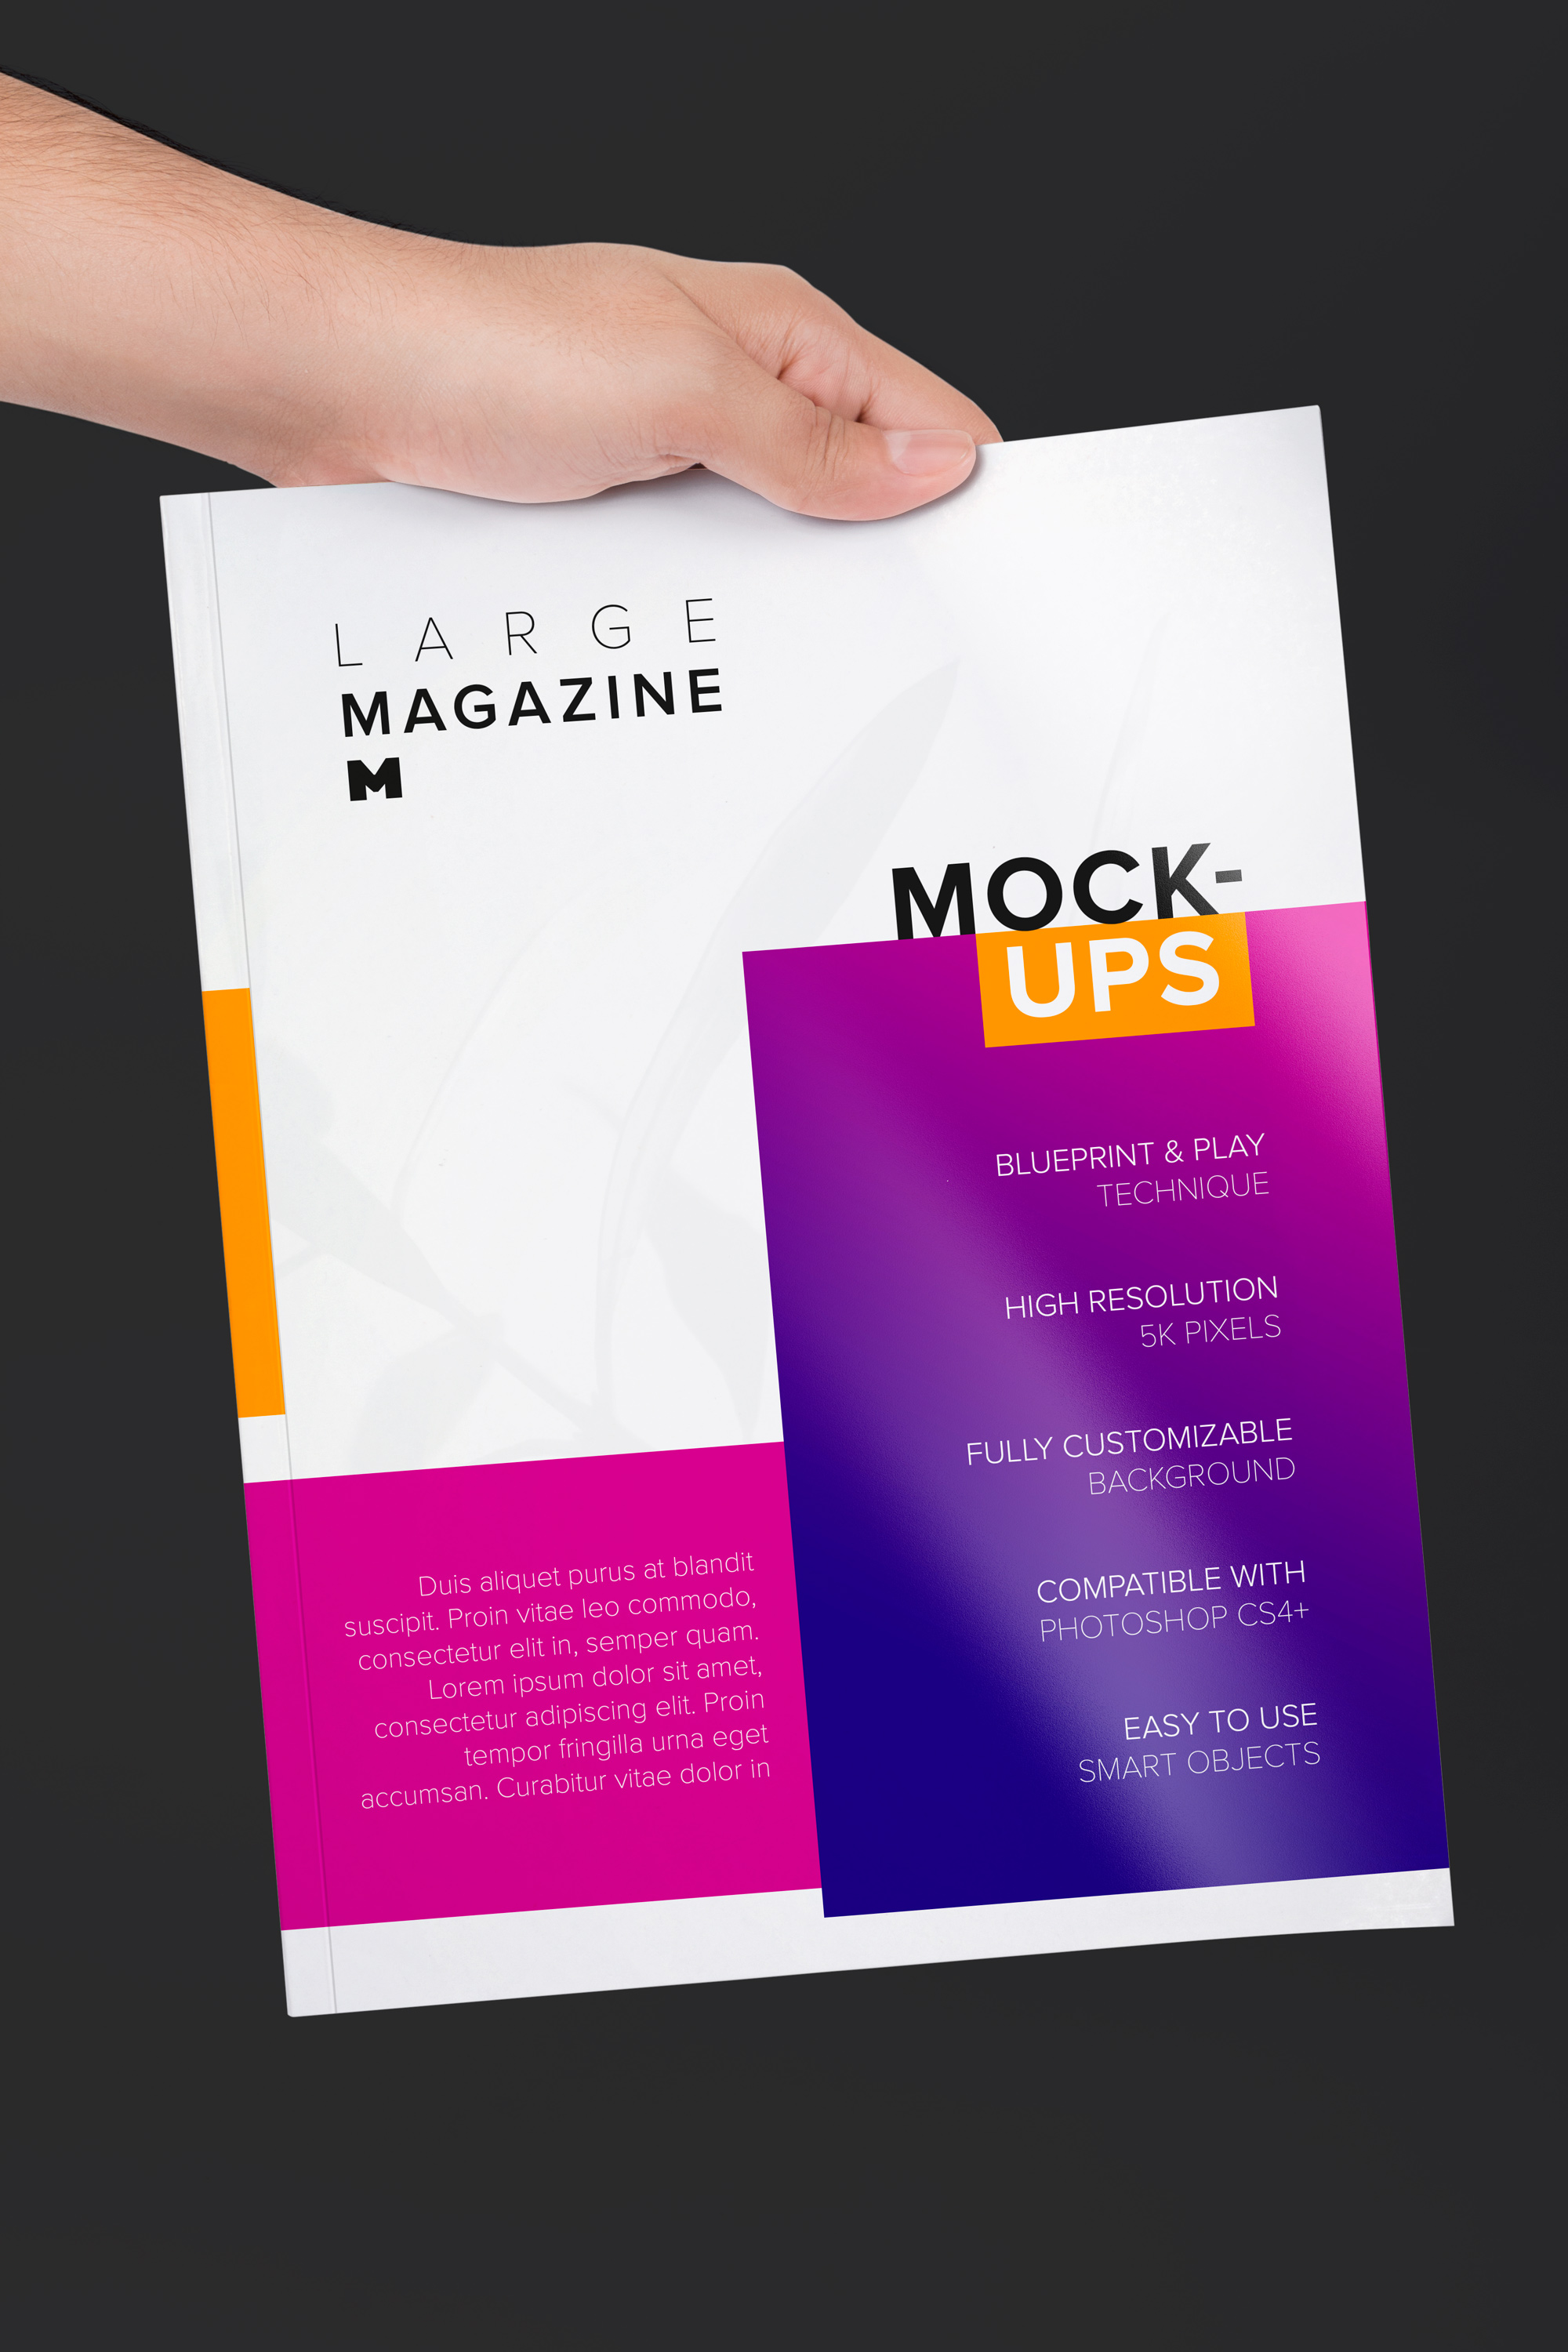 大型杂志封面设计效果图样机04 Large Magazine Cover Mockup 04插图4